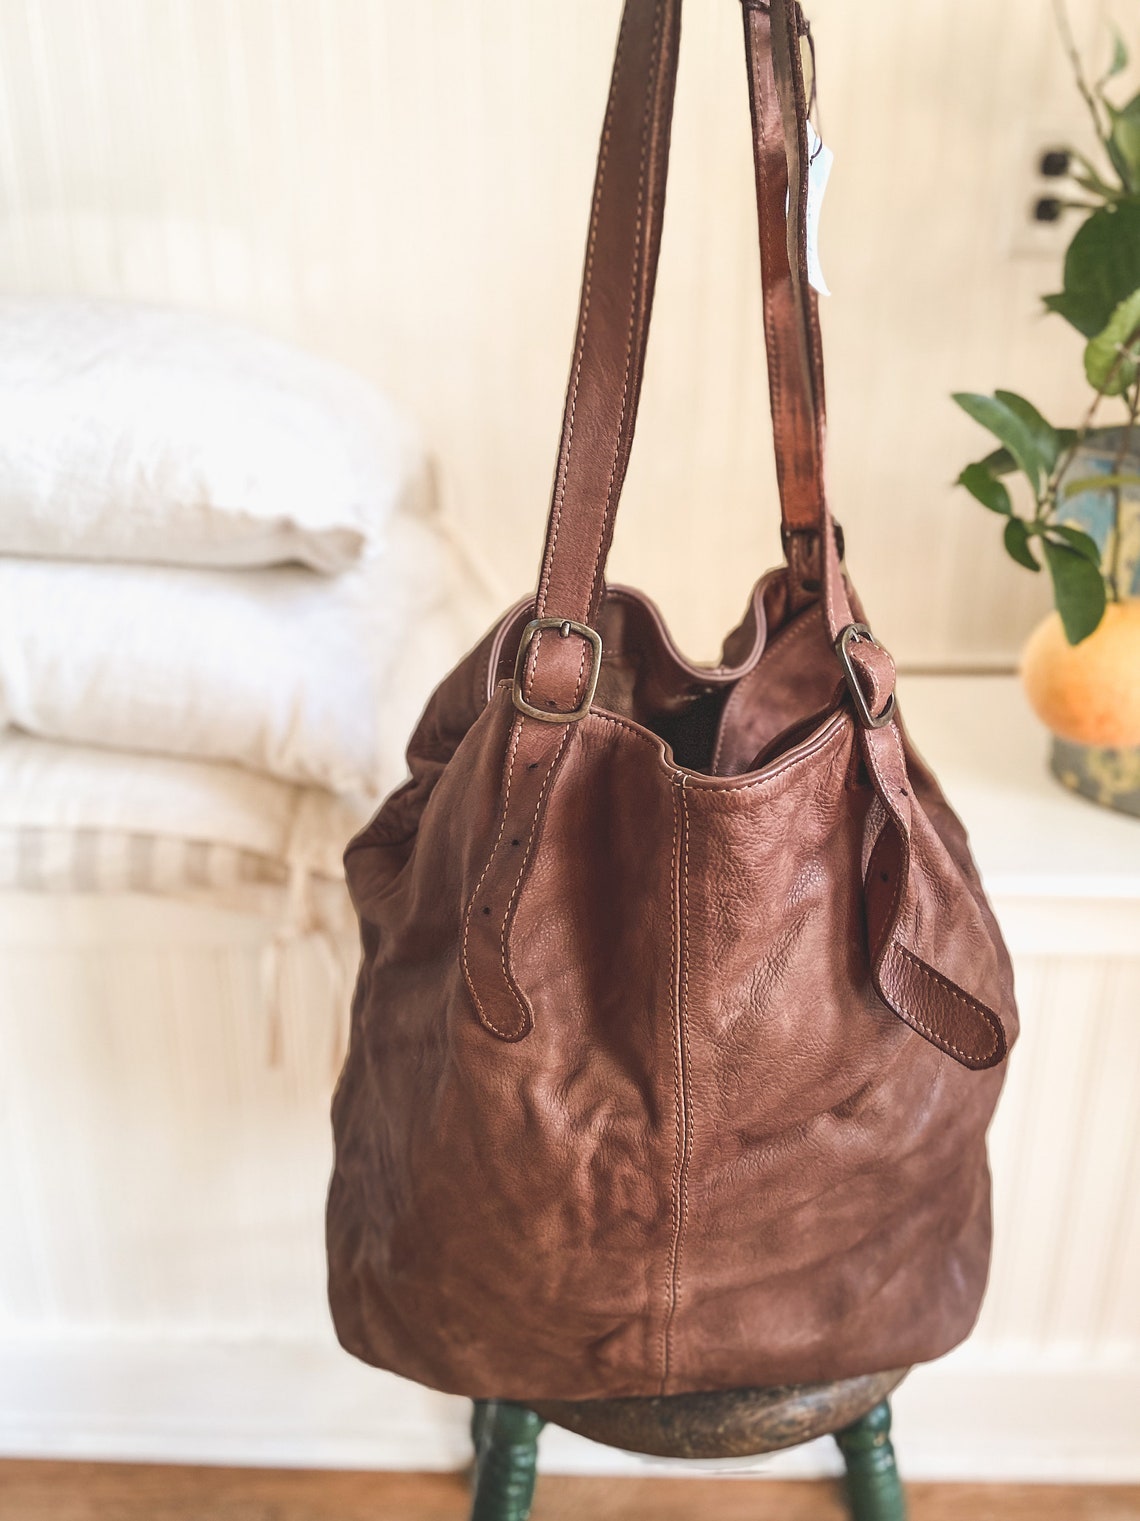 Distressed Italian Leather handmade handbag/ shoulder bag | Etsy